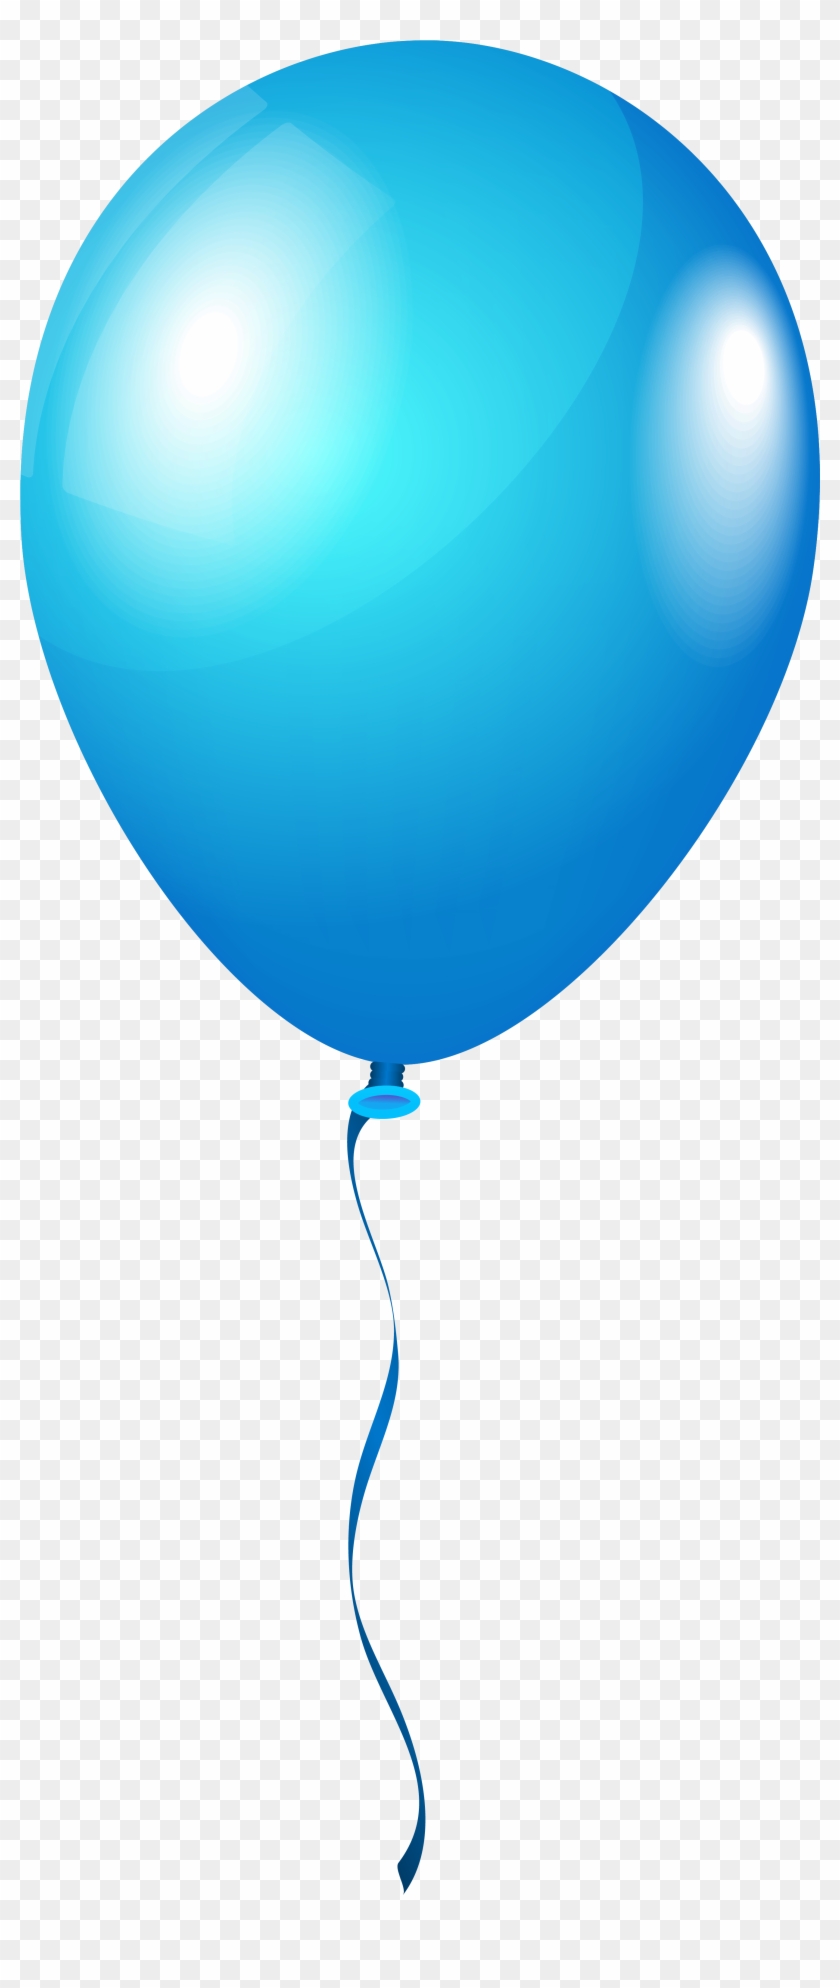 Clipart Blue Balloons Clip Art Library - Blue Balloon Png #127712